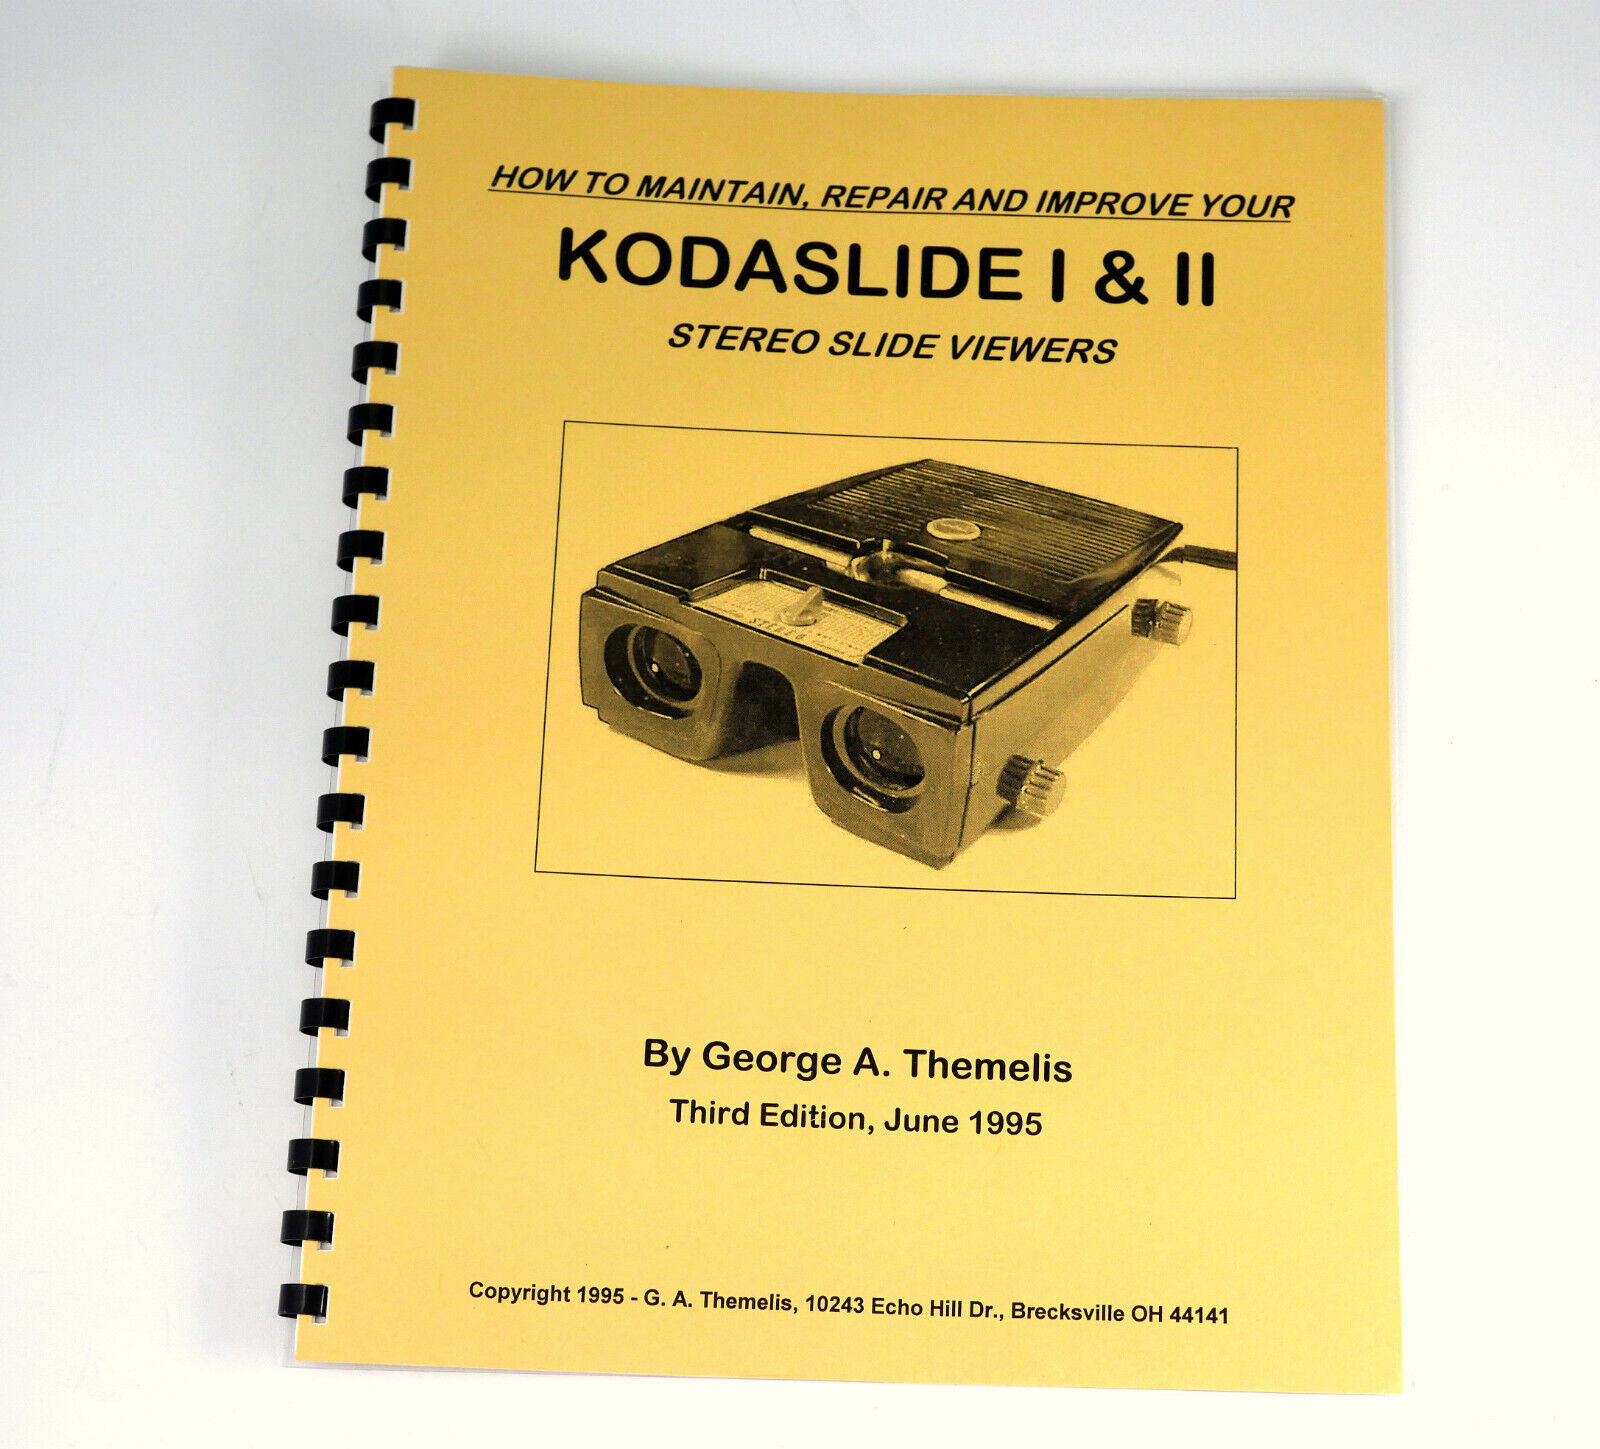 KODAK Kodaslide stereo slide Viewer BOOK by DrT